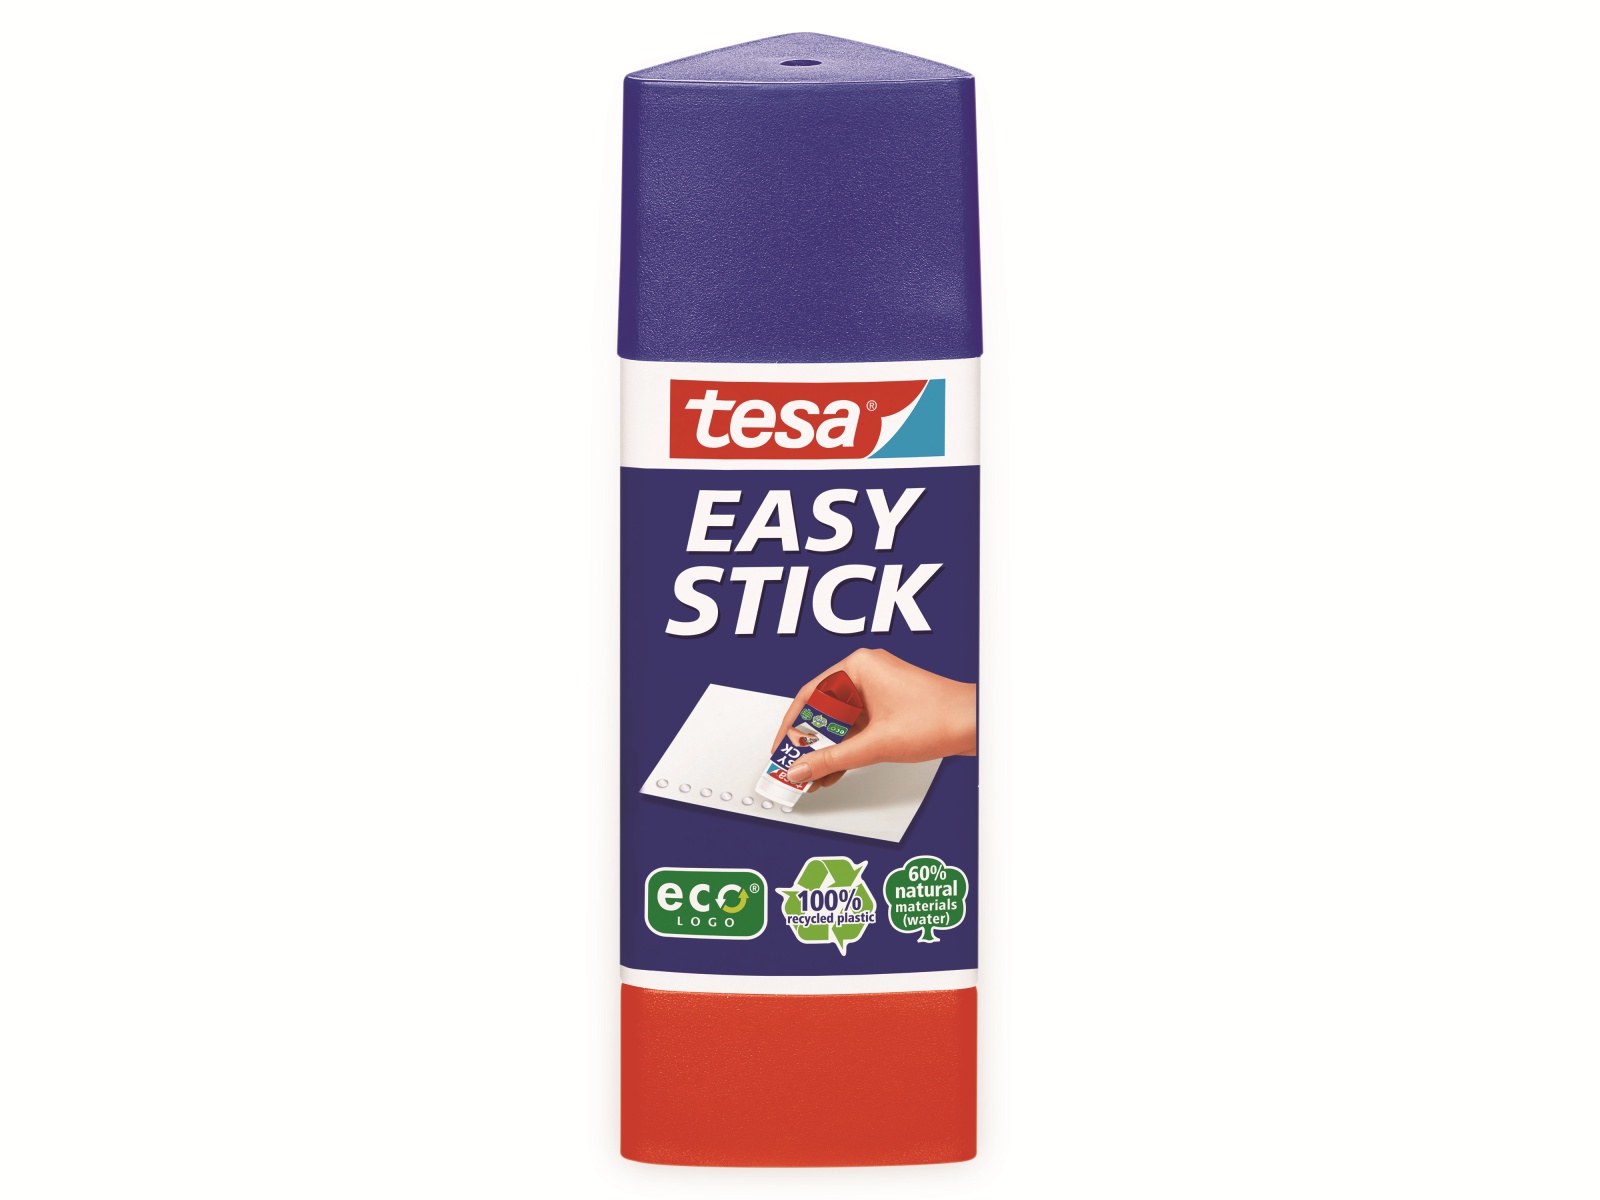 TESA ® Klebestift Easy Stick ecoLogo 12 g, 57272-00200-03